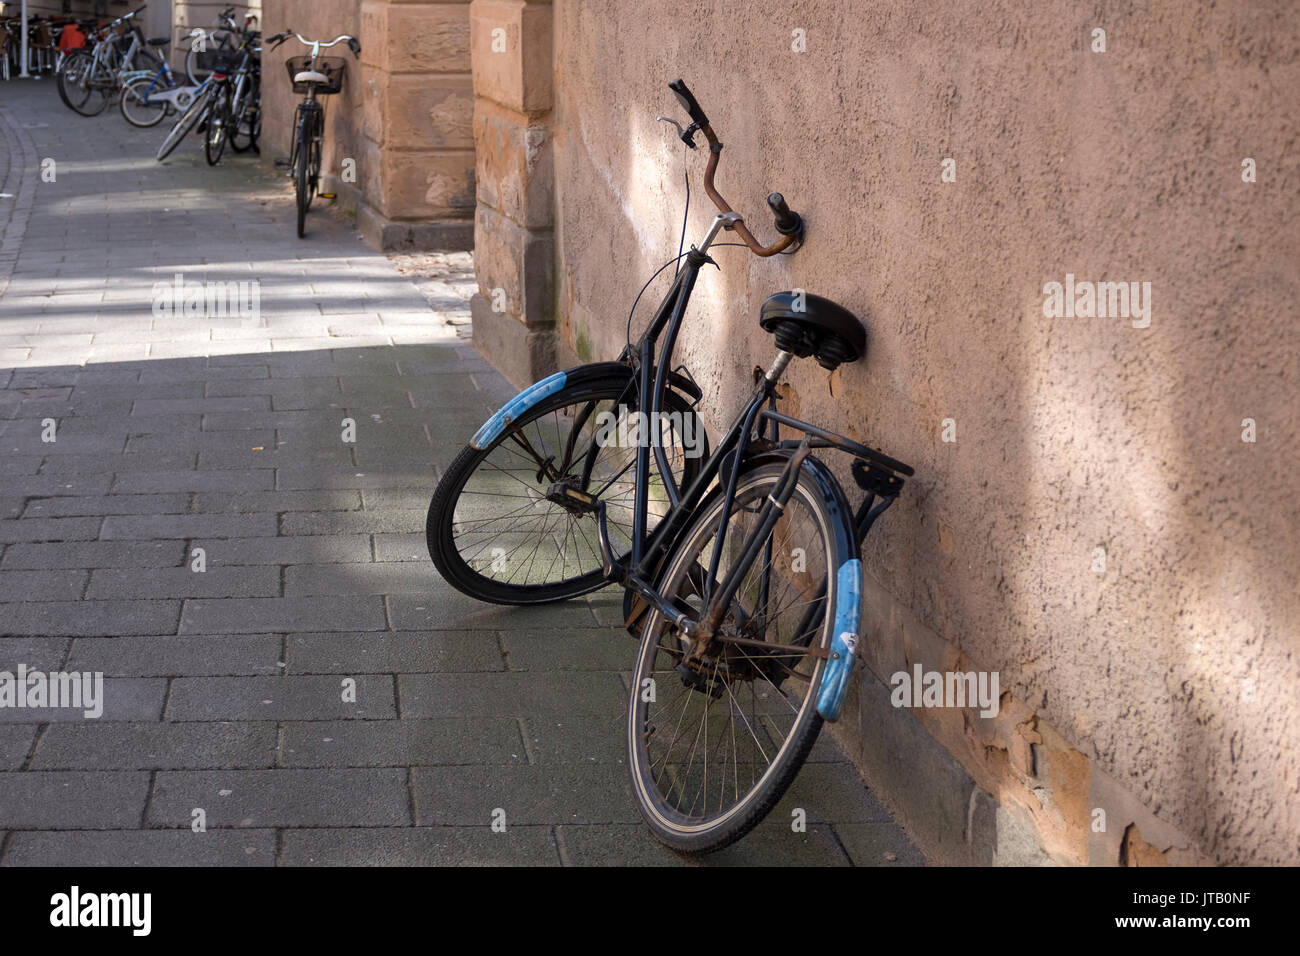 Bicycle in street, Copenhagen Denmark Stock Photo